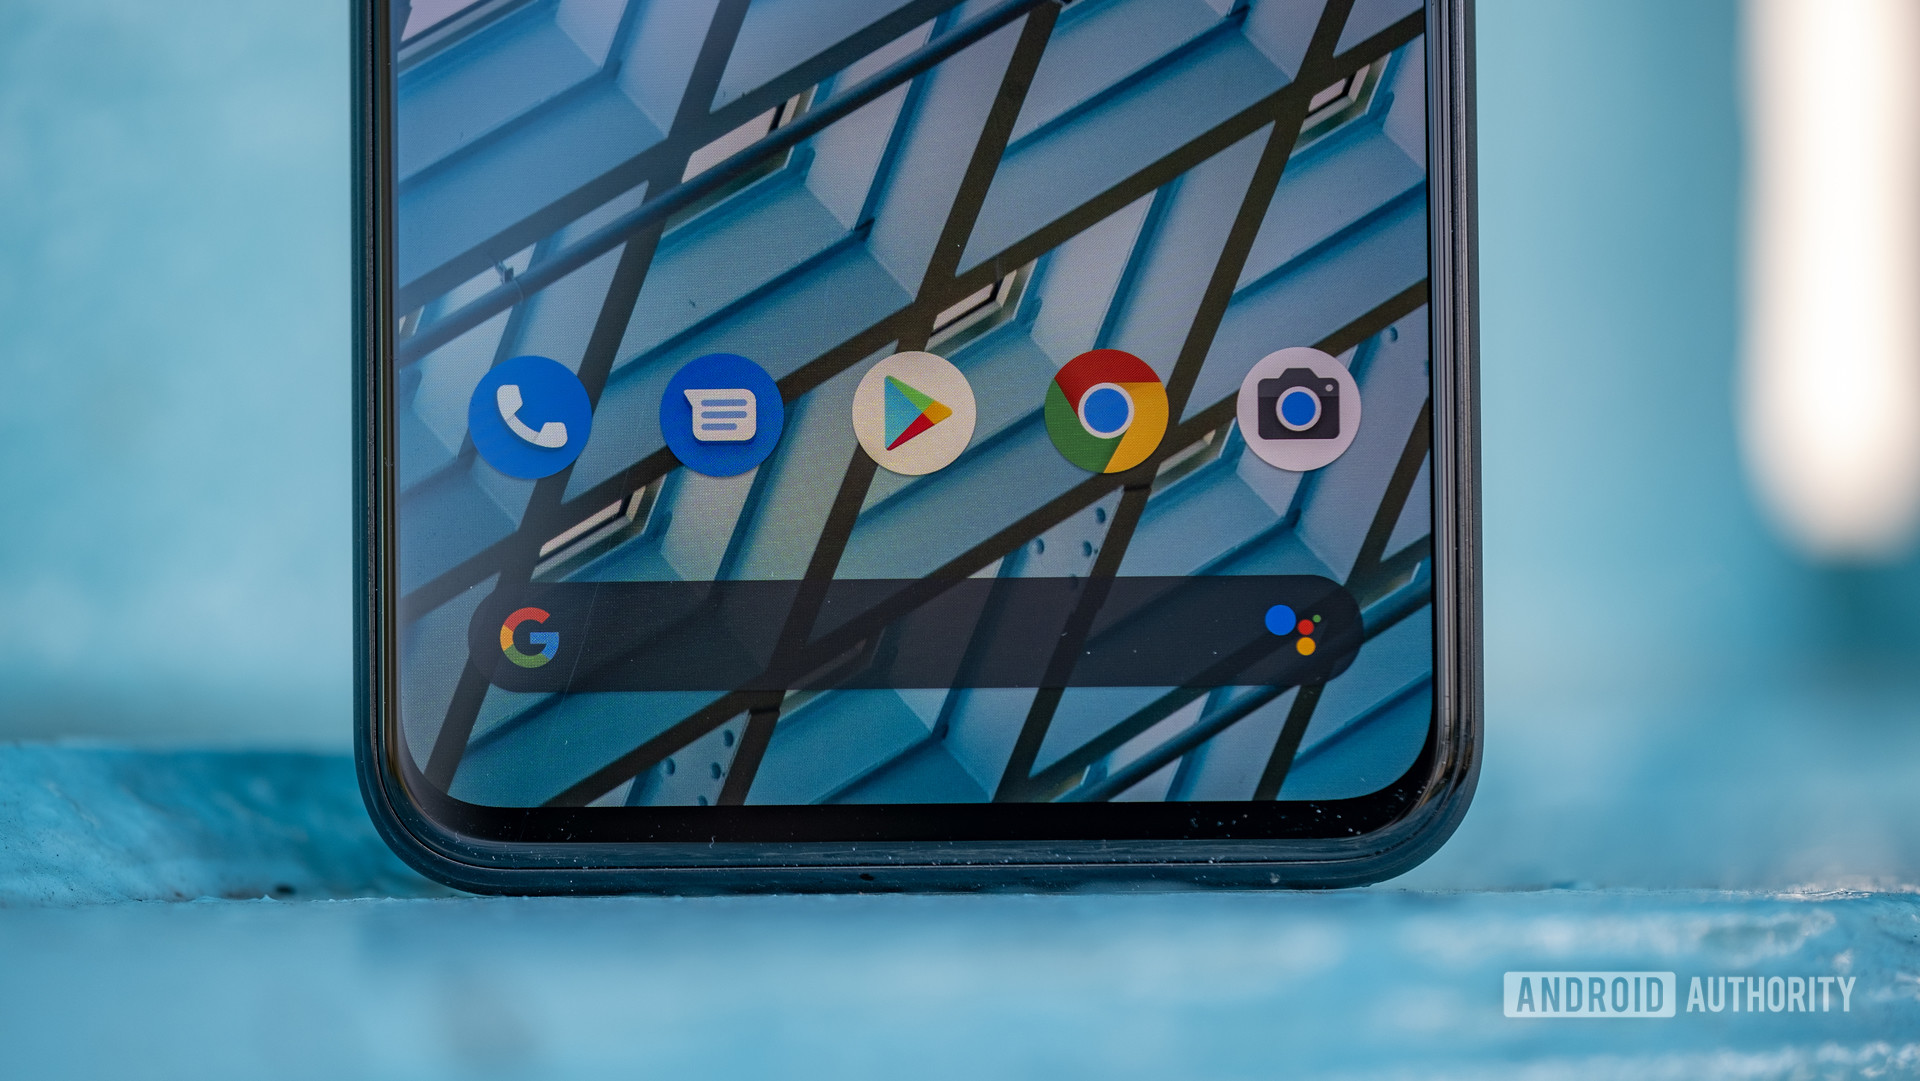 Google Pixel 4 XL bottom bezel and app dock 10